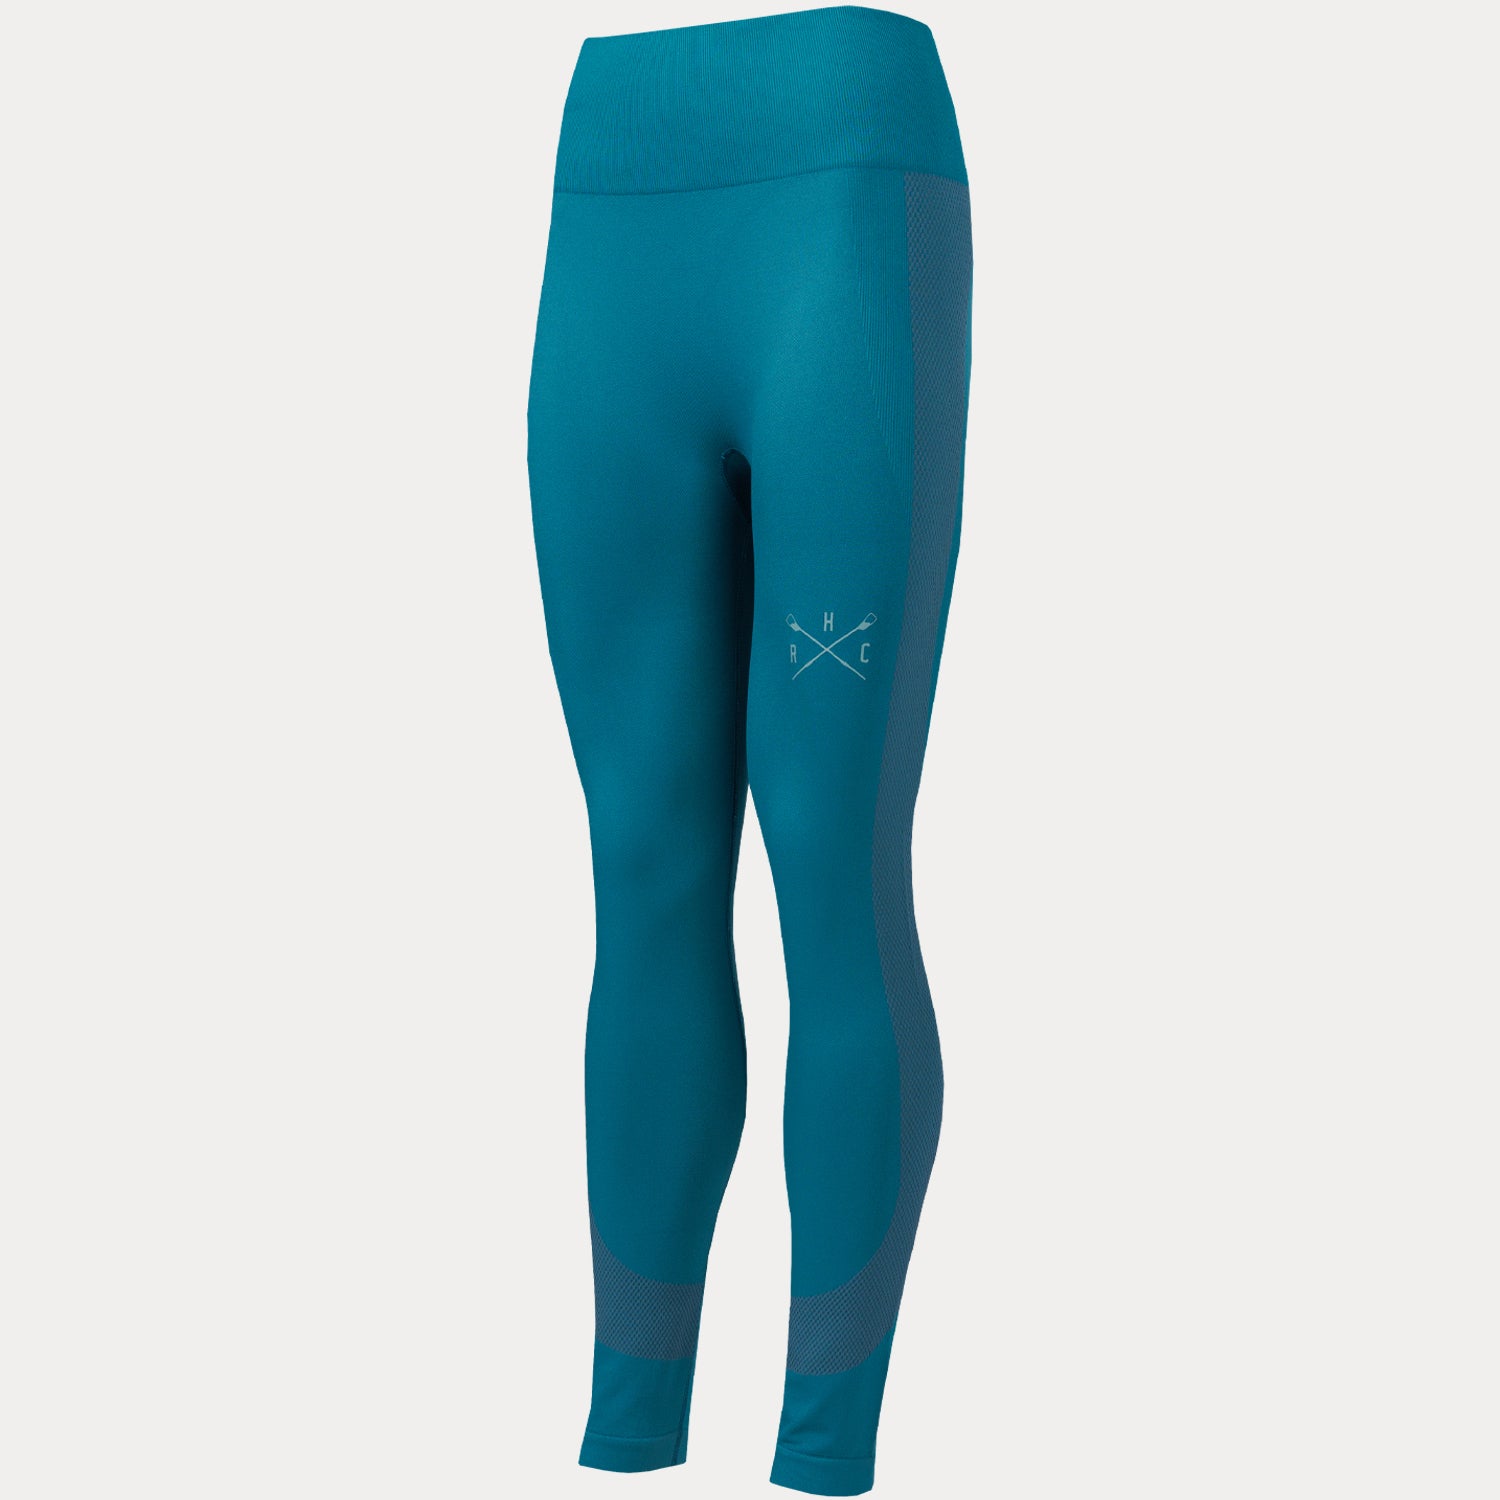 dark blue flex seamless leggings with crossed oars hydrow logo on left leg